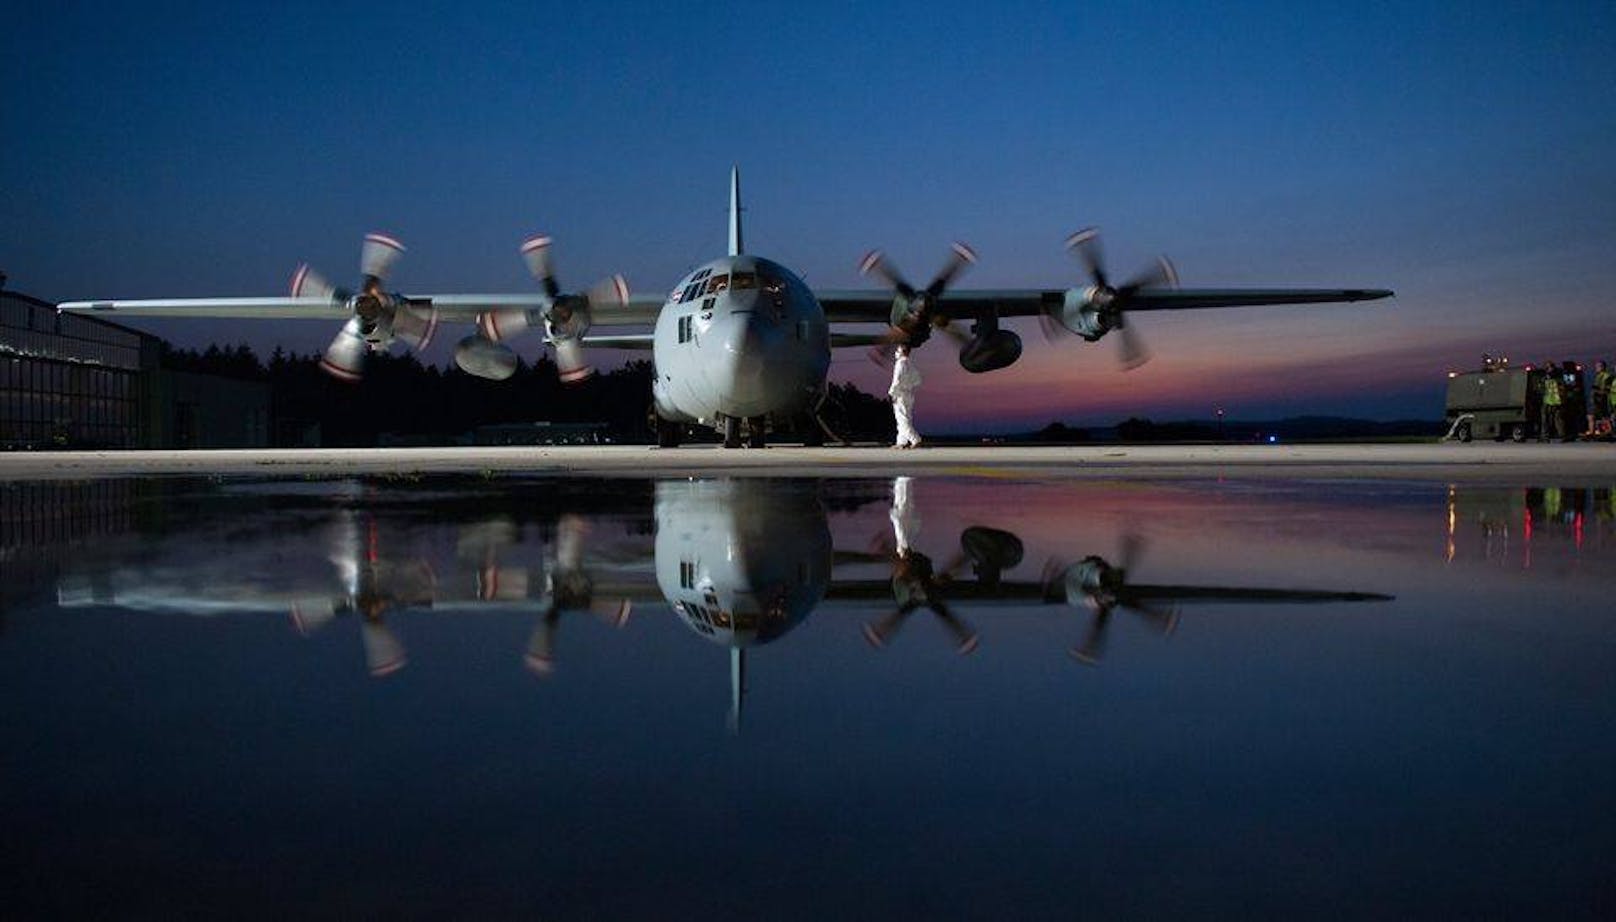 Die umgebaute C-130 "Hercules" brachte die Soldaten nach Linz.